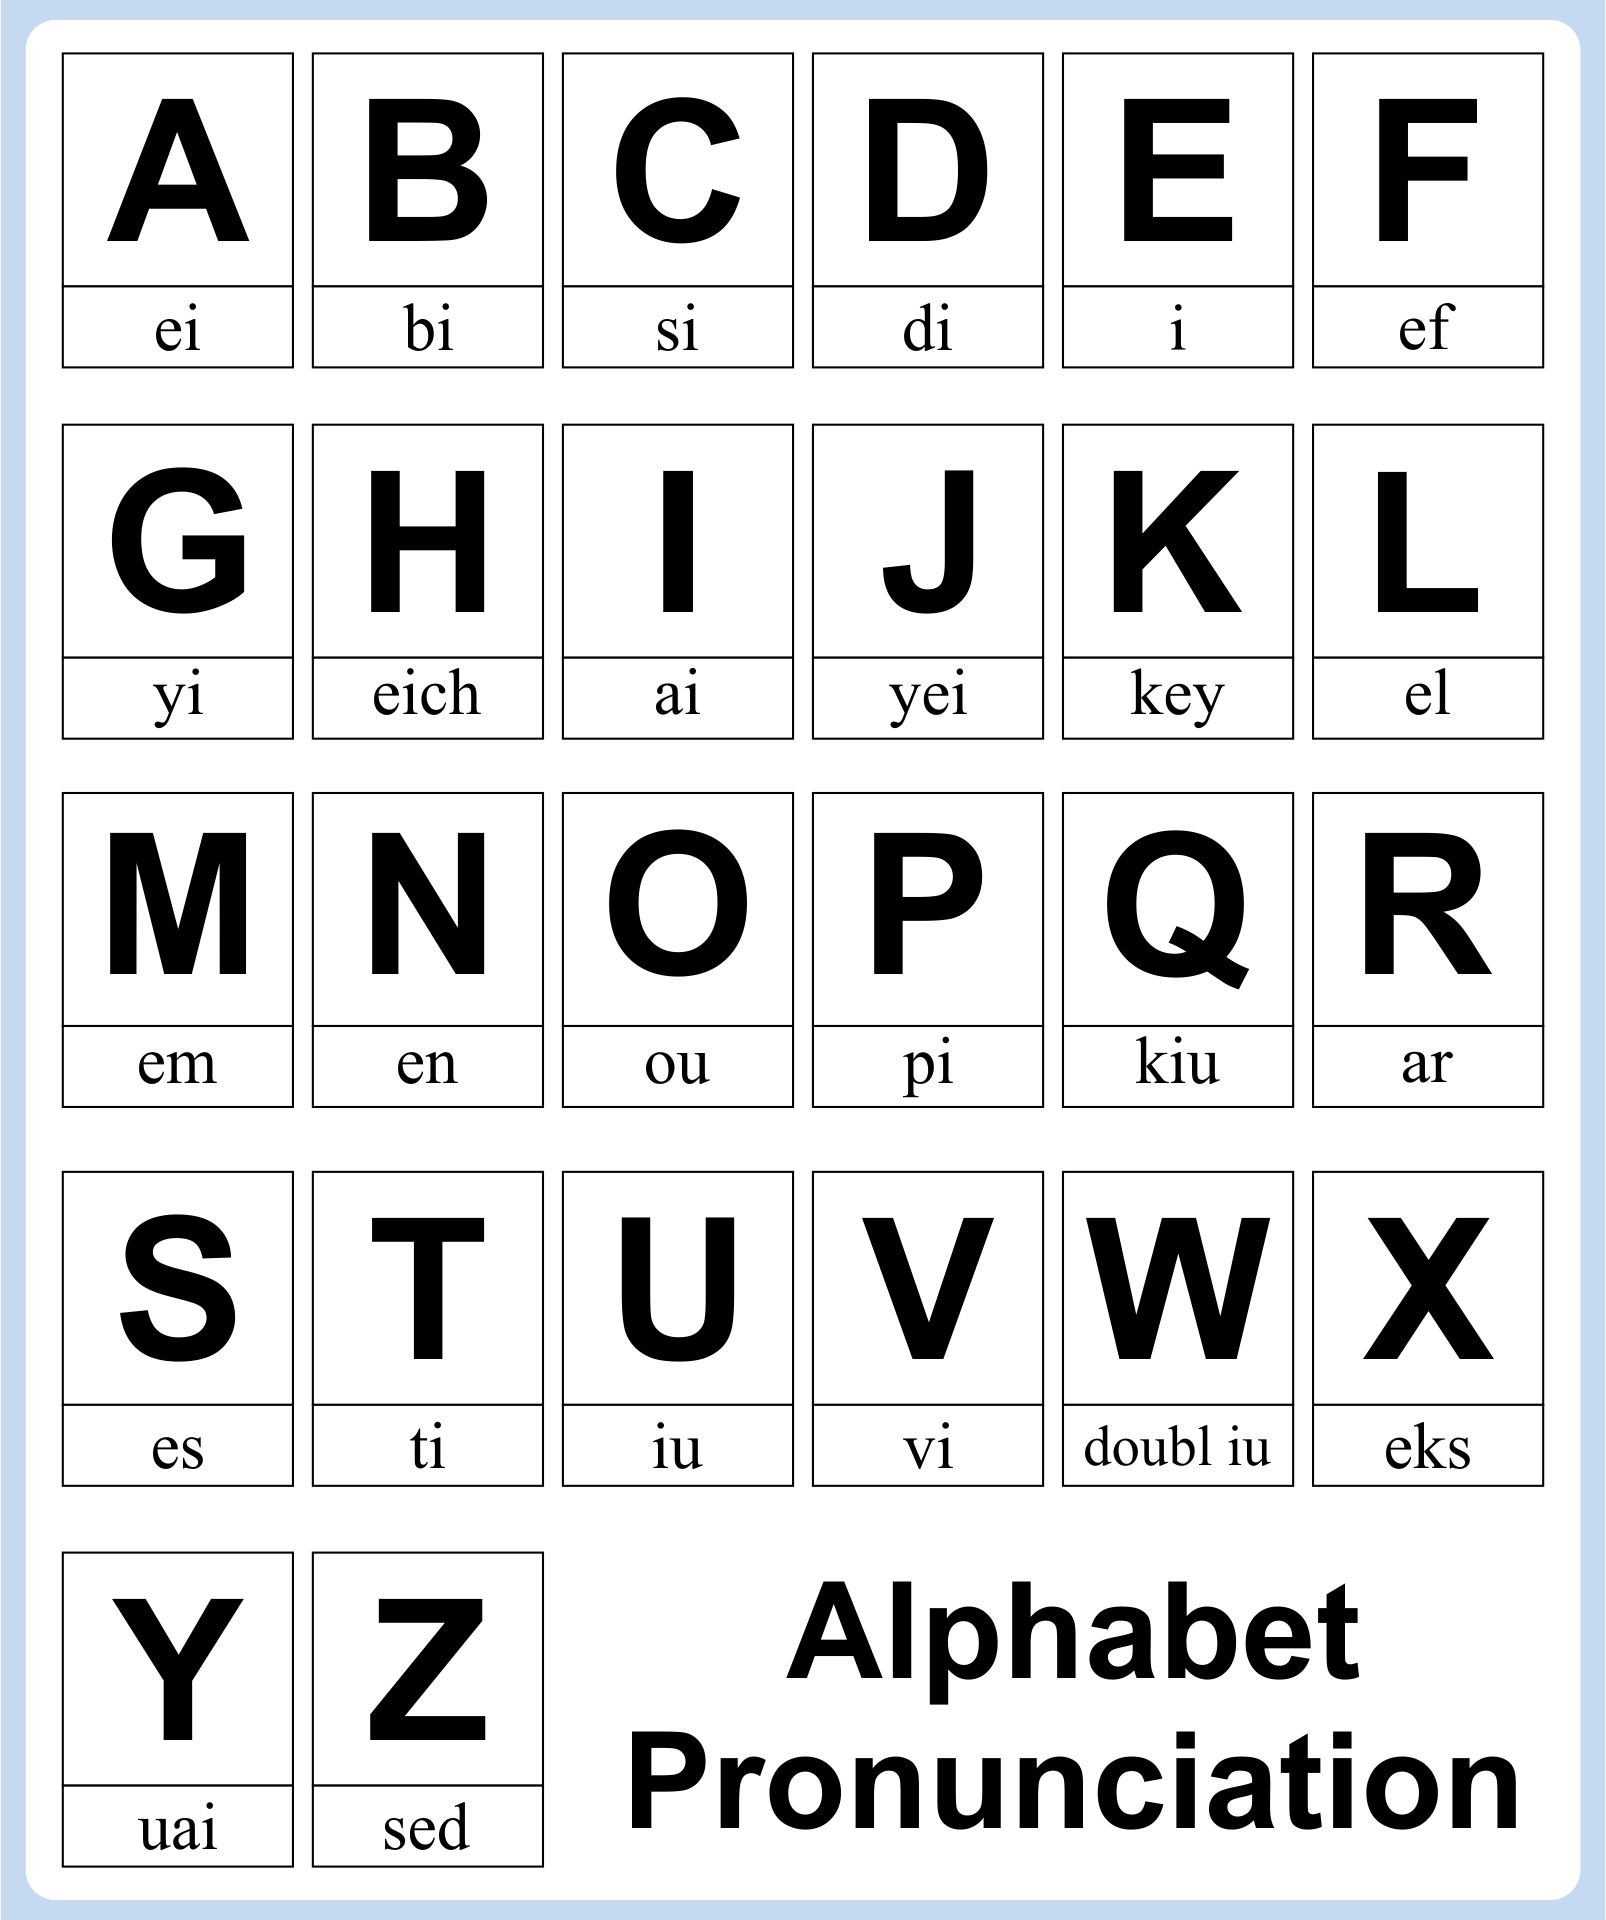 alphabet-sounds-english-pronunciation-for-esl-learners-free-cross